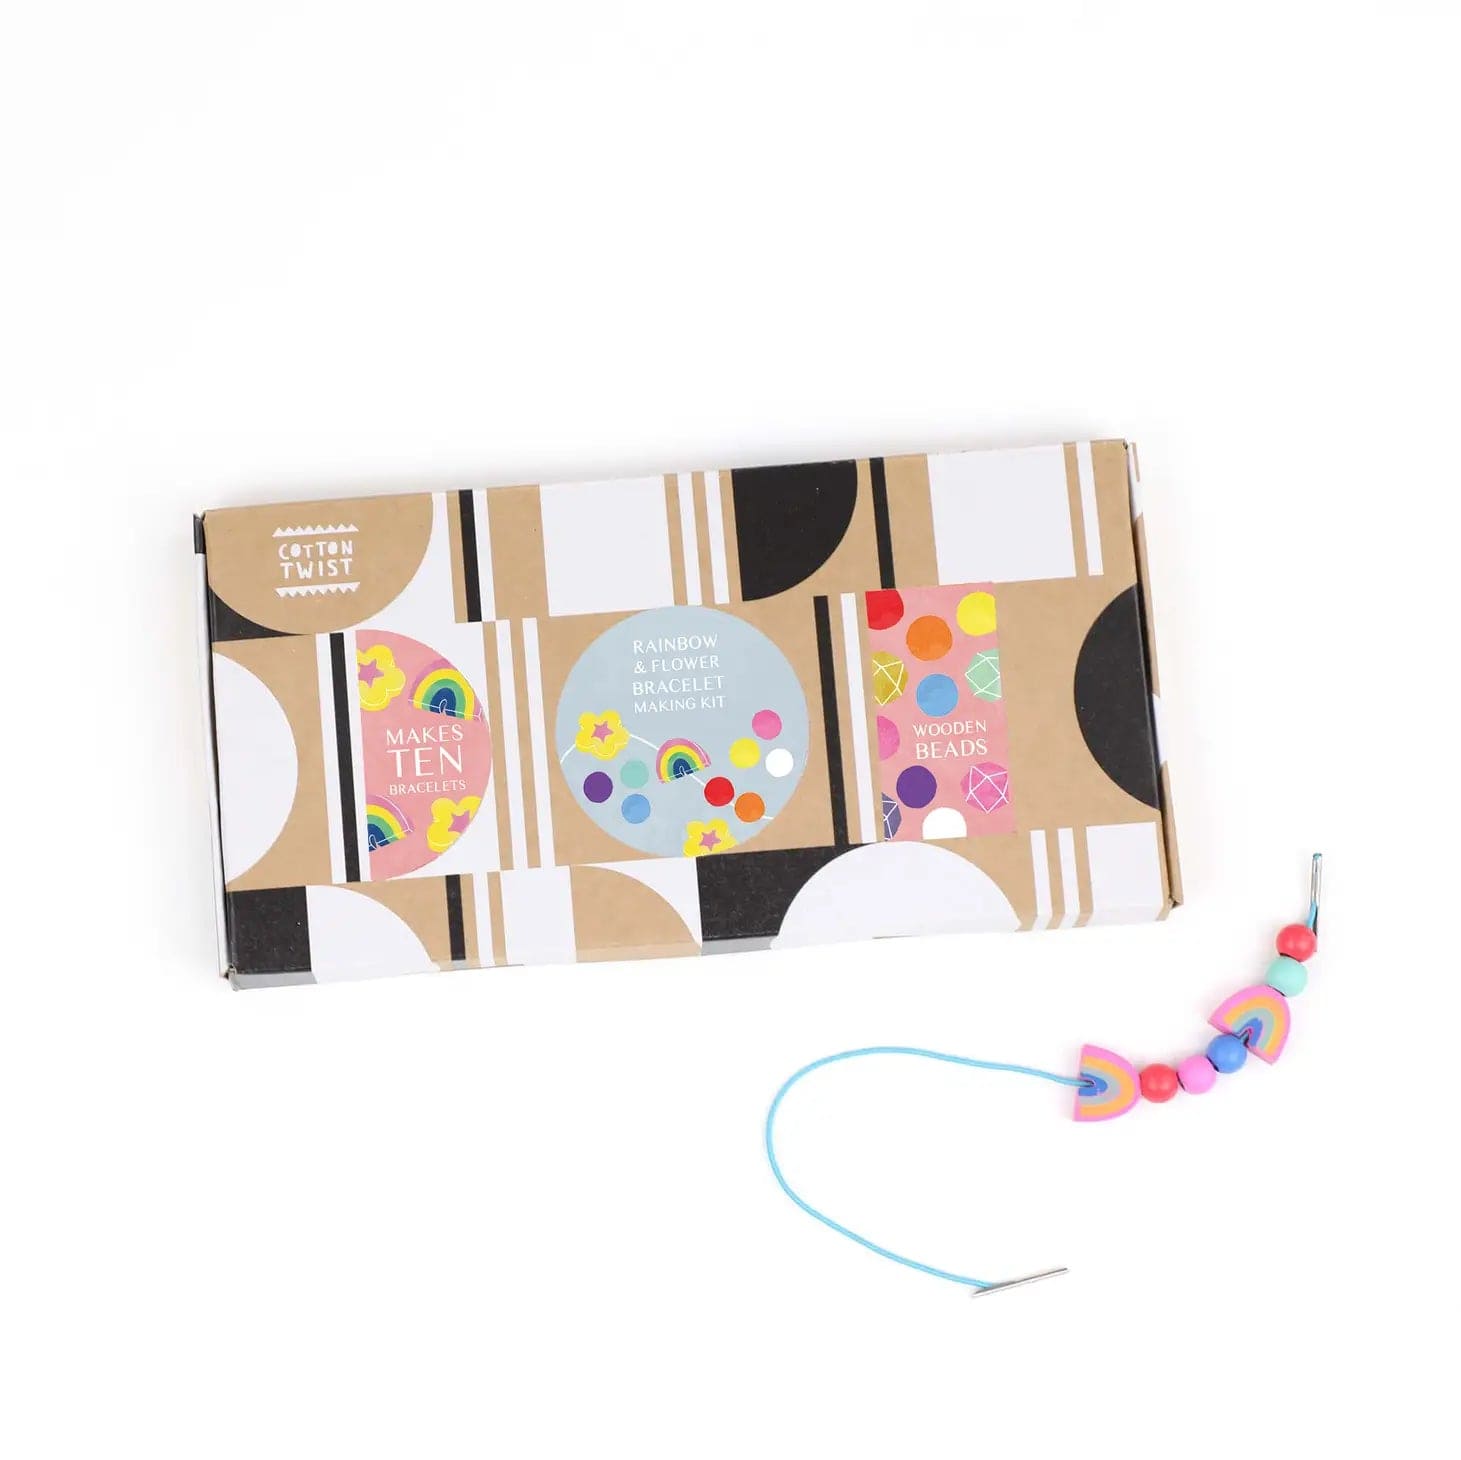 Rainbow & Flower - Bracelet Making Kit Cotton Twist Toy Craft Kits Lil Tulips